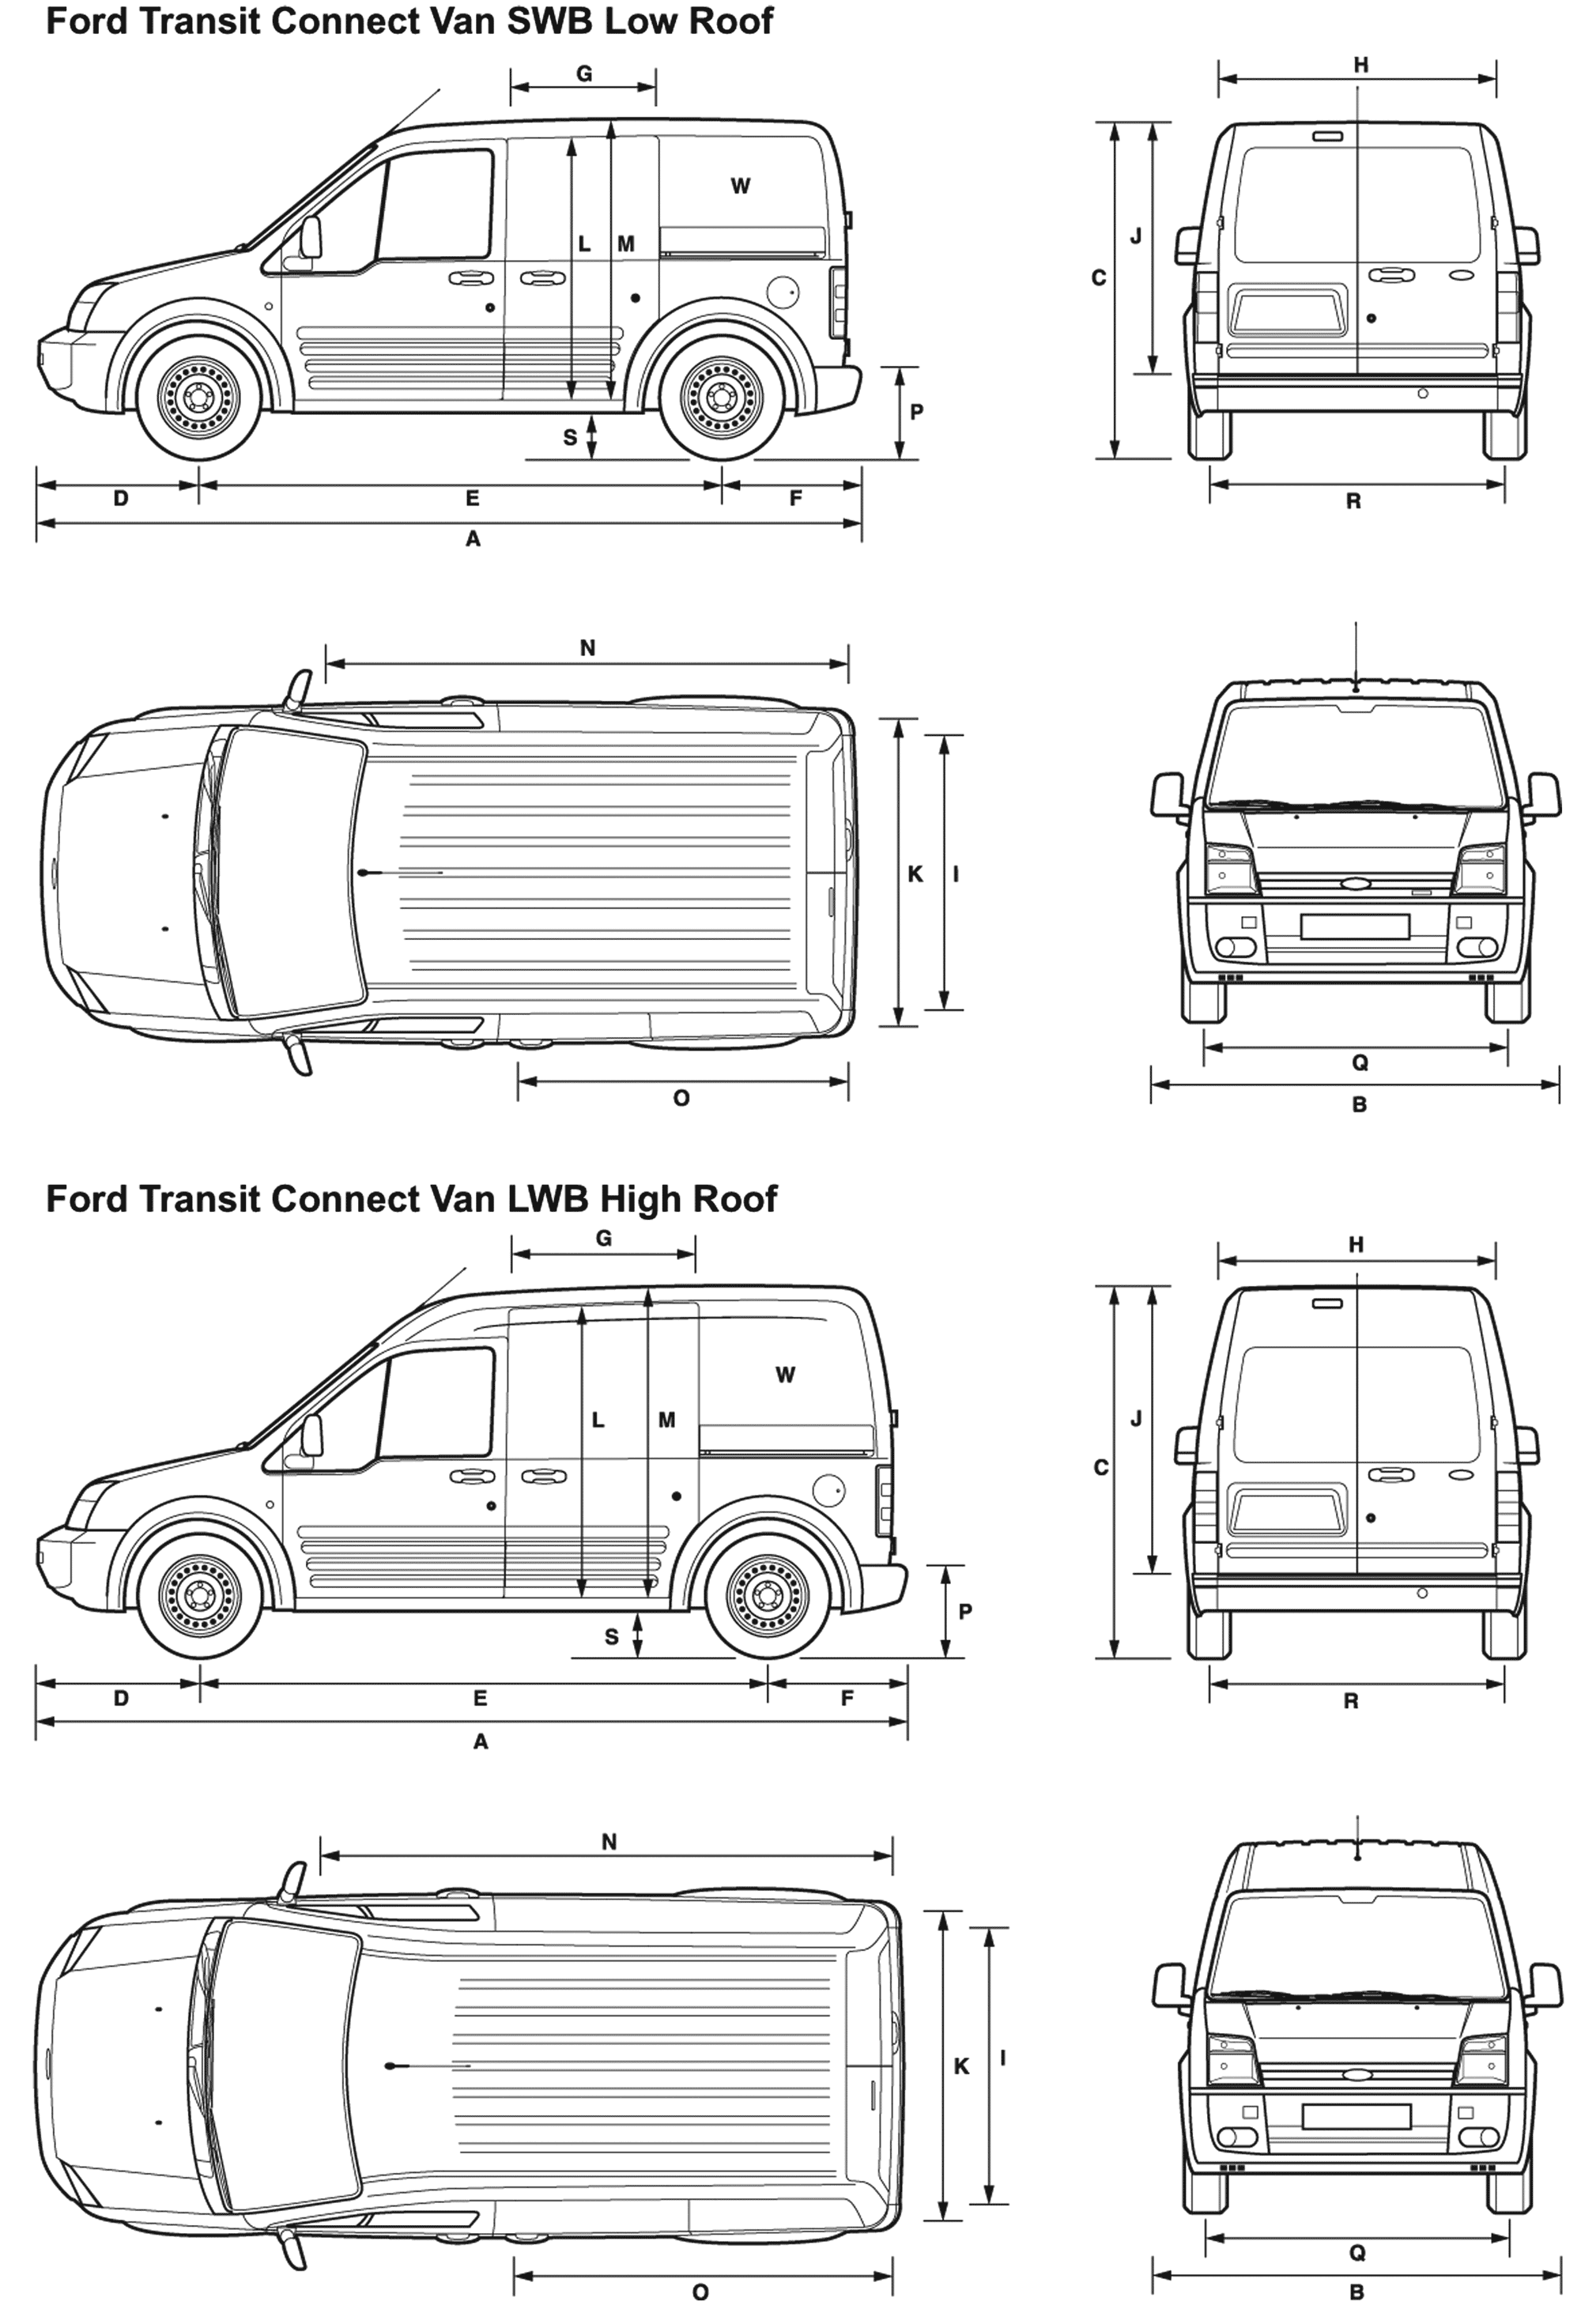 Ford Transit (Форд Транзит) - Продажа, Цены, Отзывы, Фото